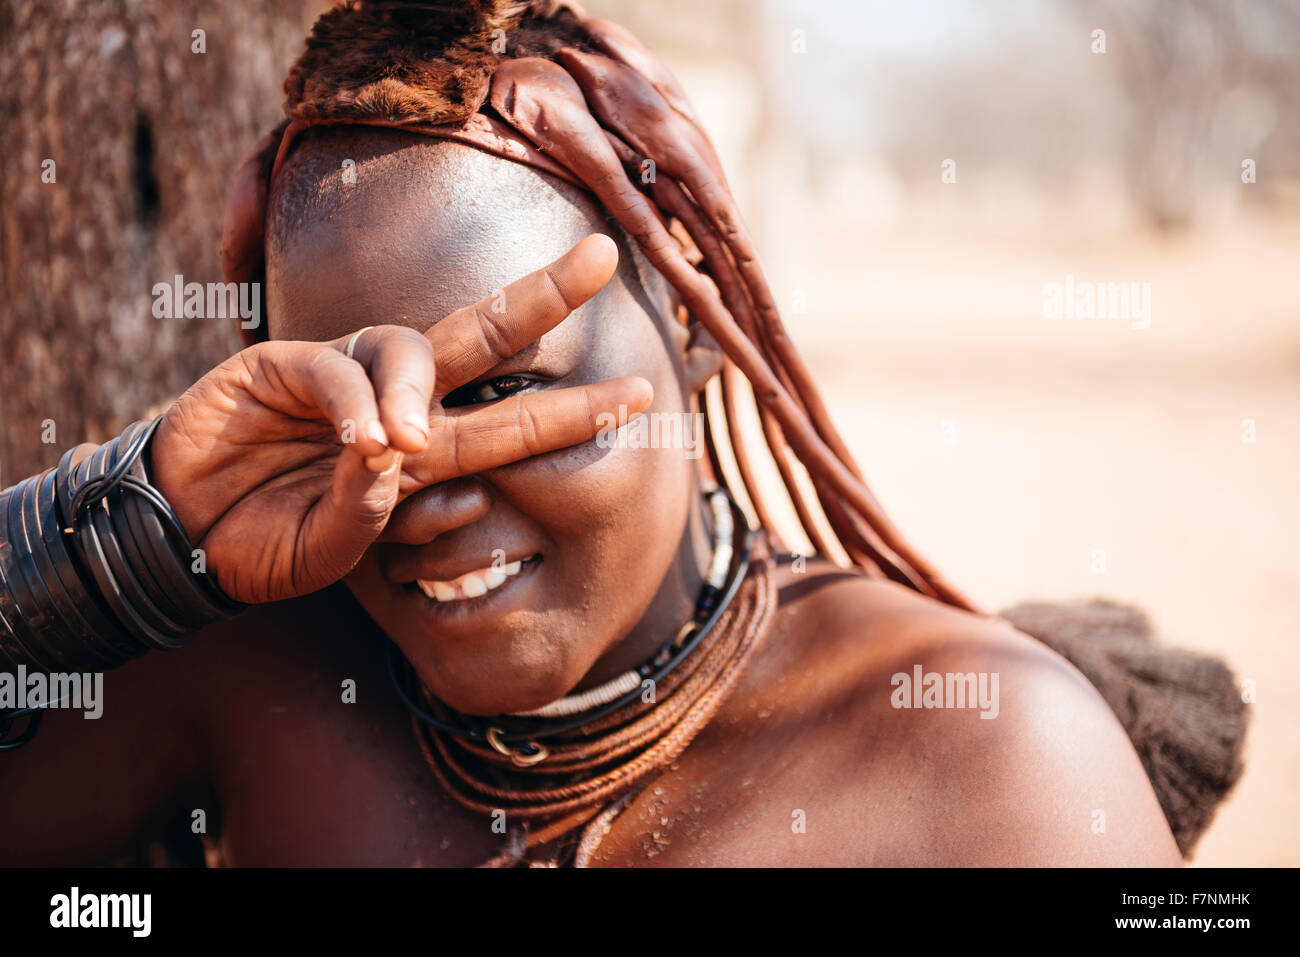 Namibia, Damaraland, portrait of smiling Himba woman making victory sign Stock Photo